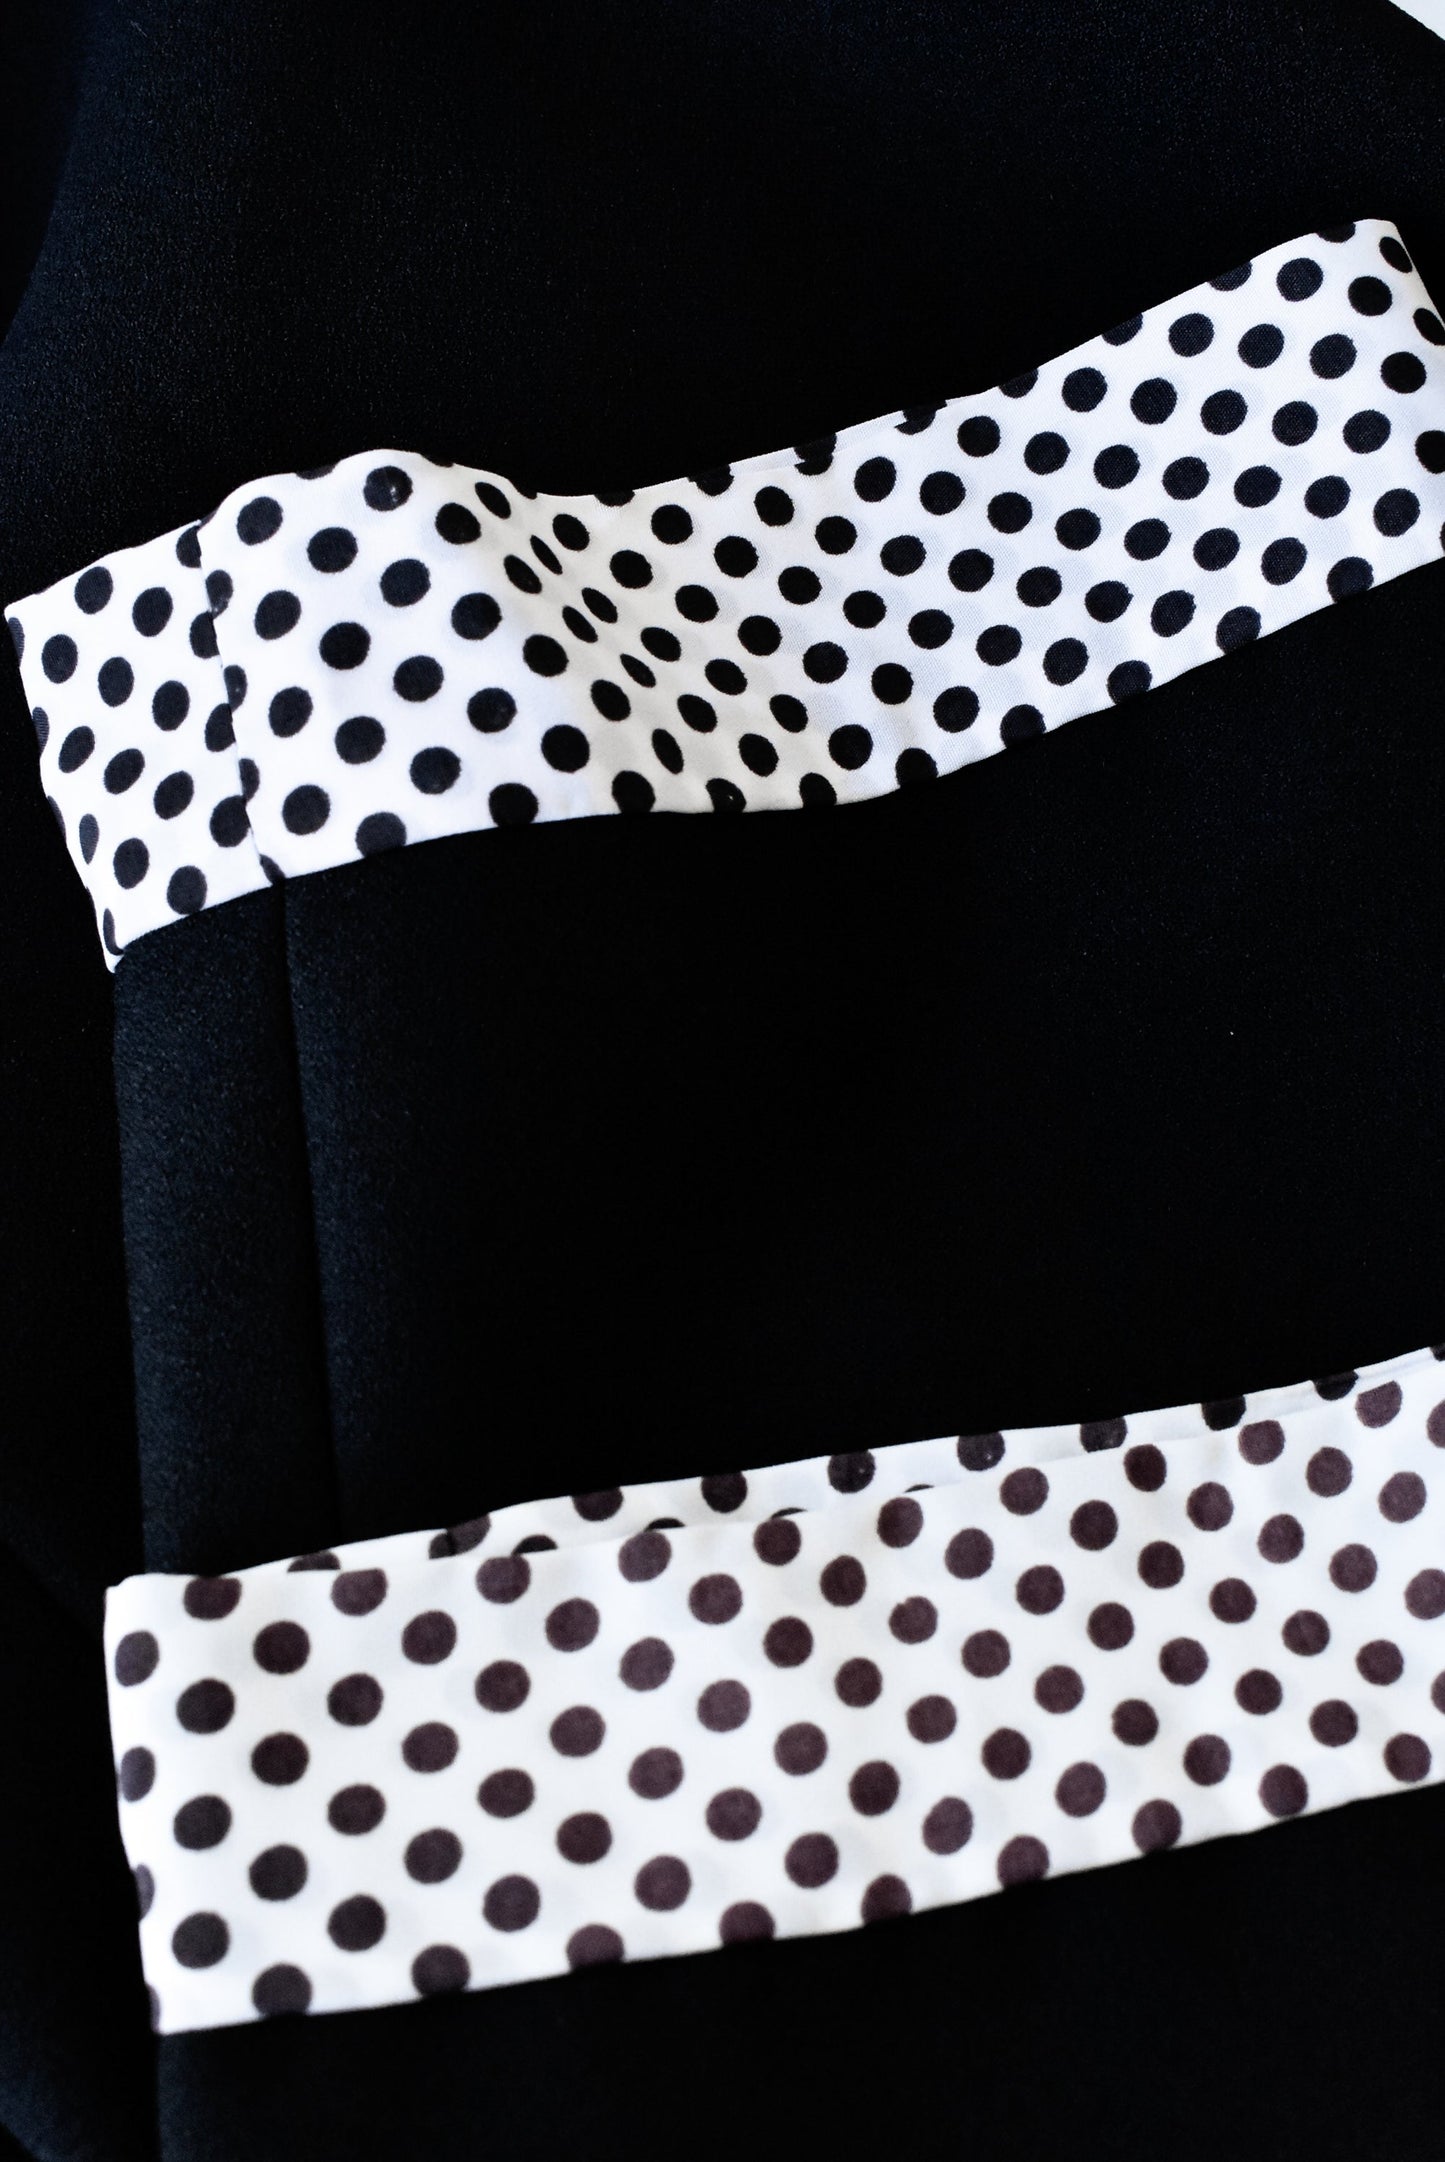 Camette retro black jacket midi sleeve with polka dot detail, size S